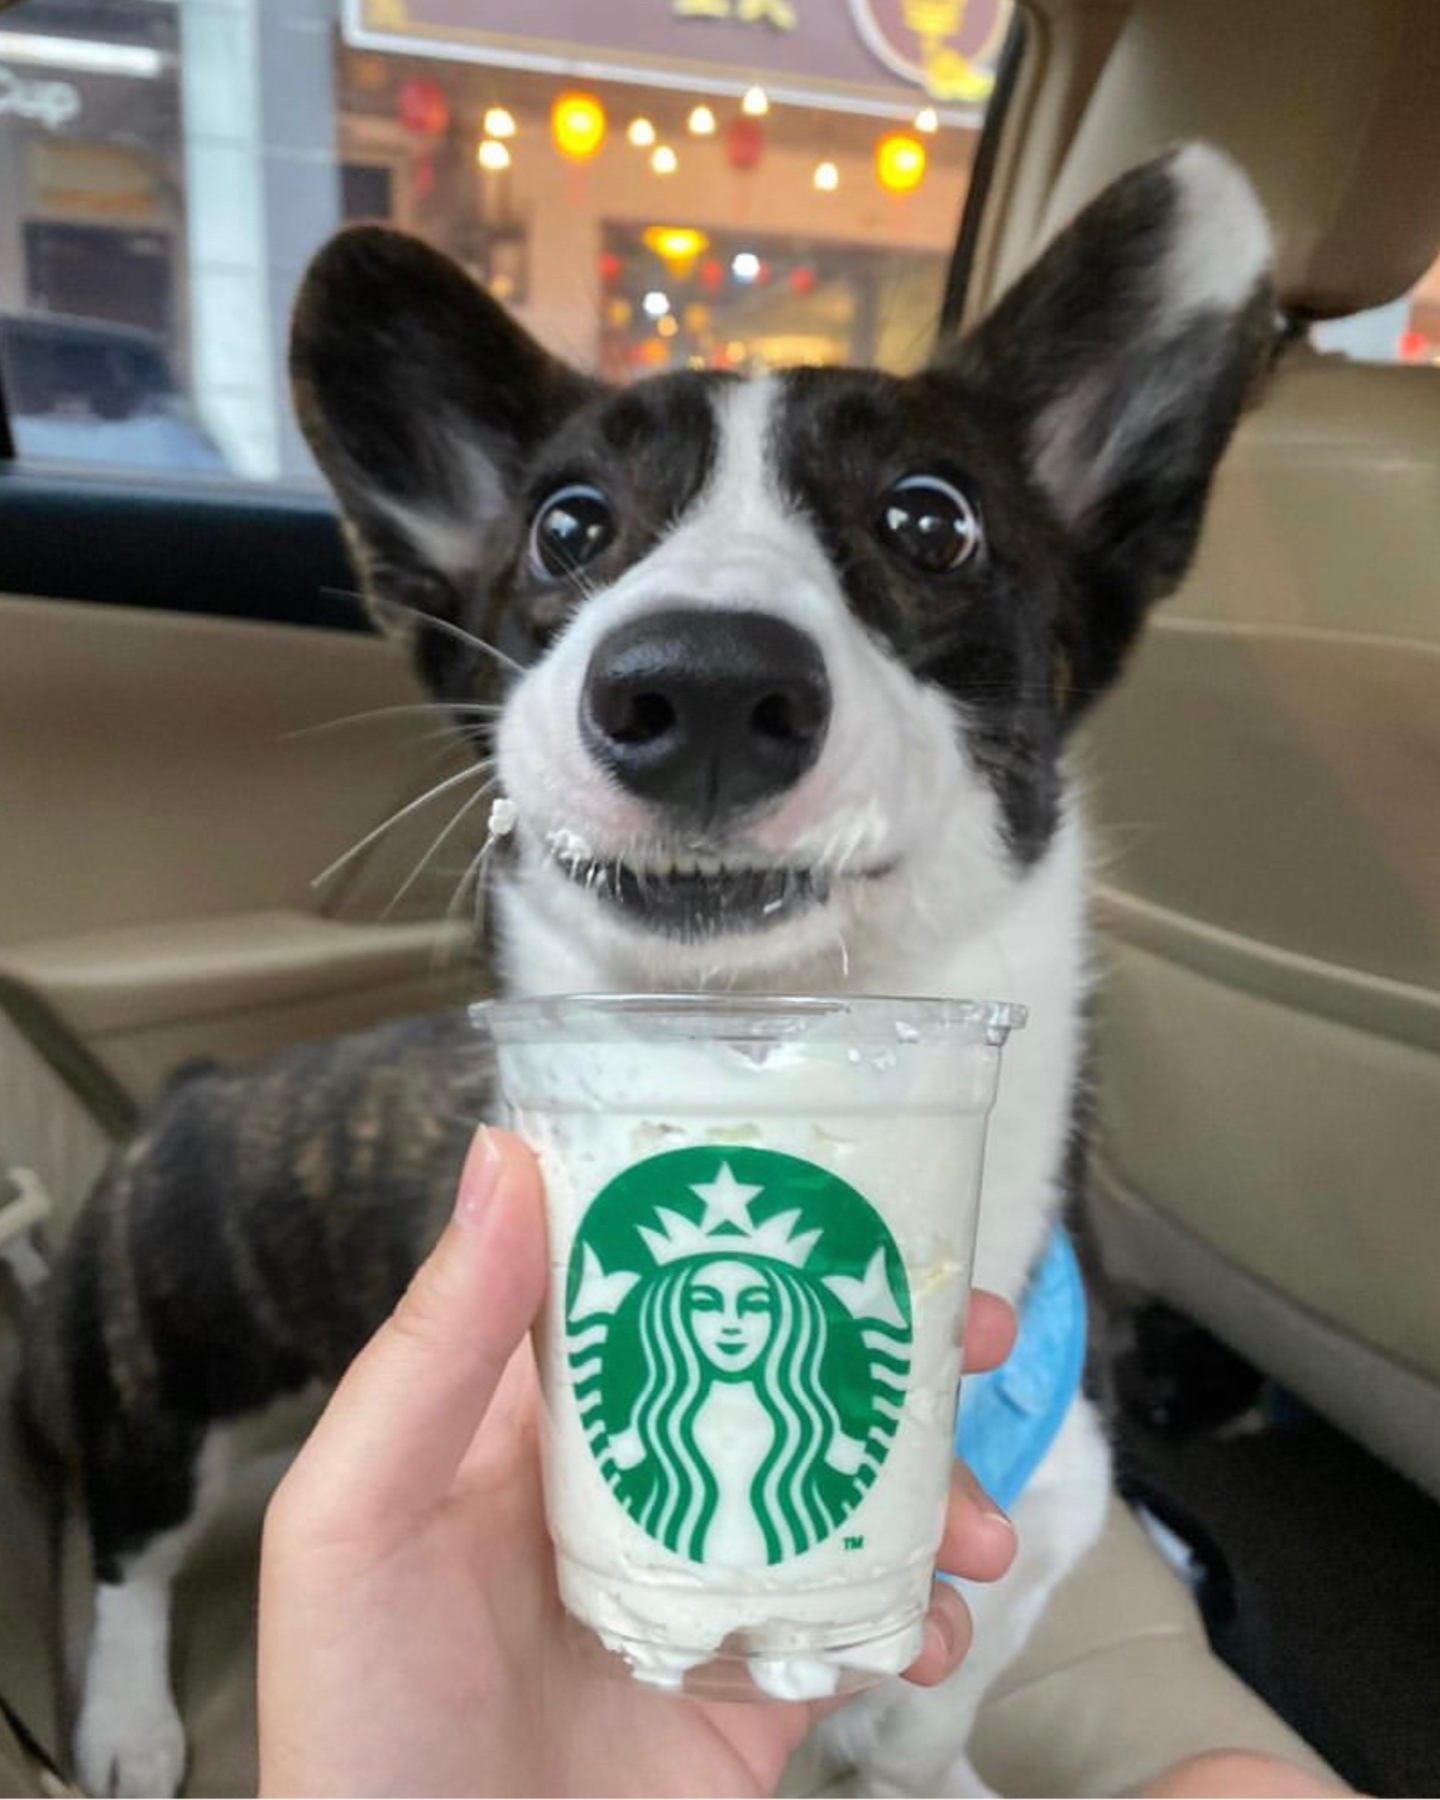 A Corgi enjoying his Puppuccino drink